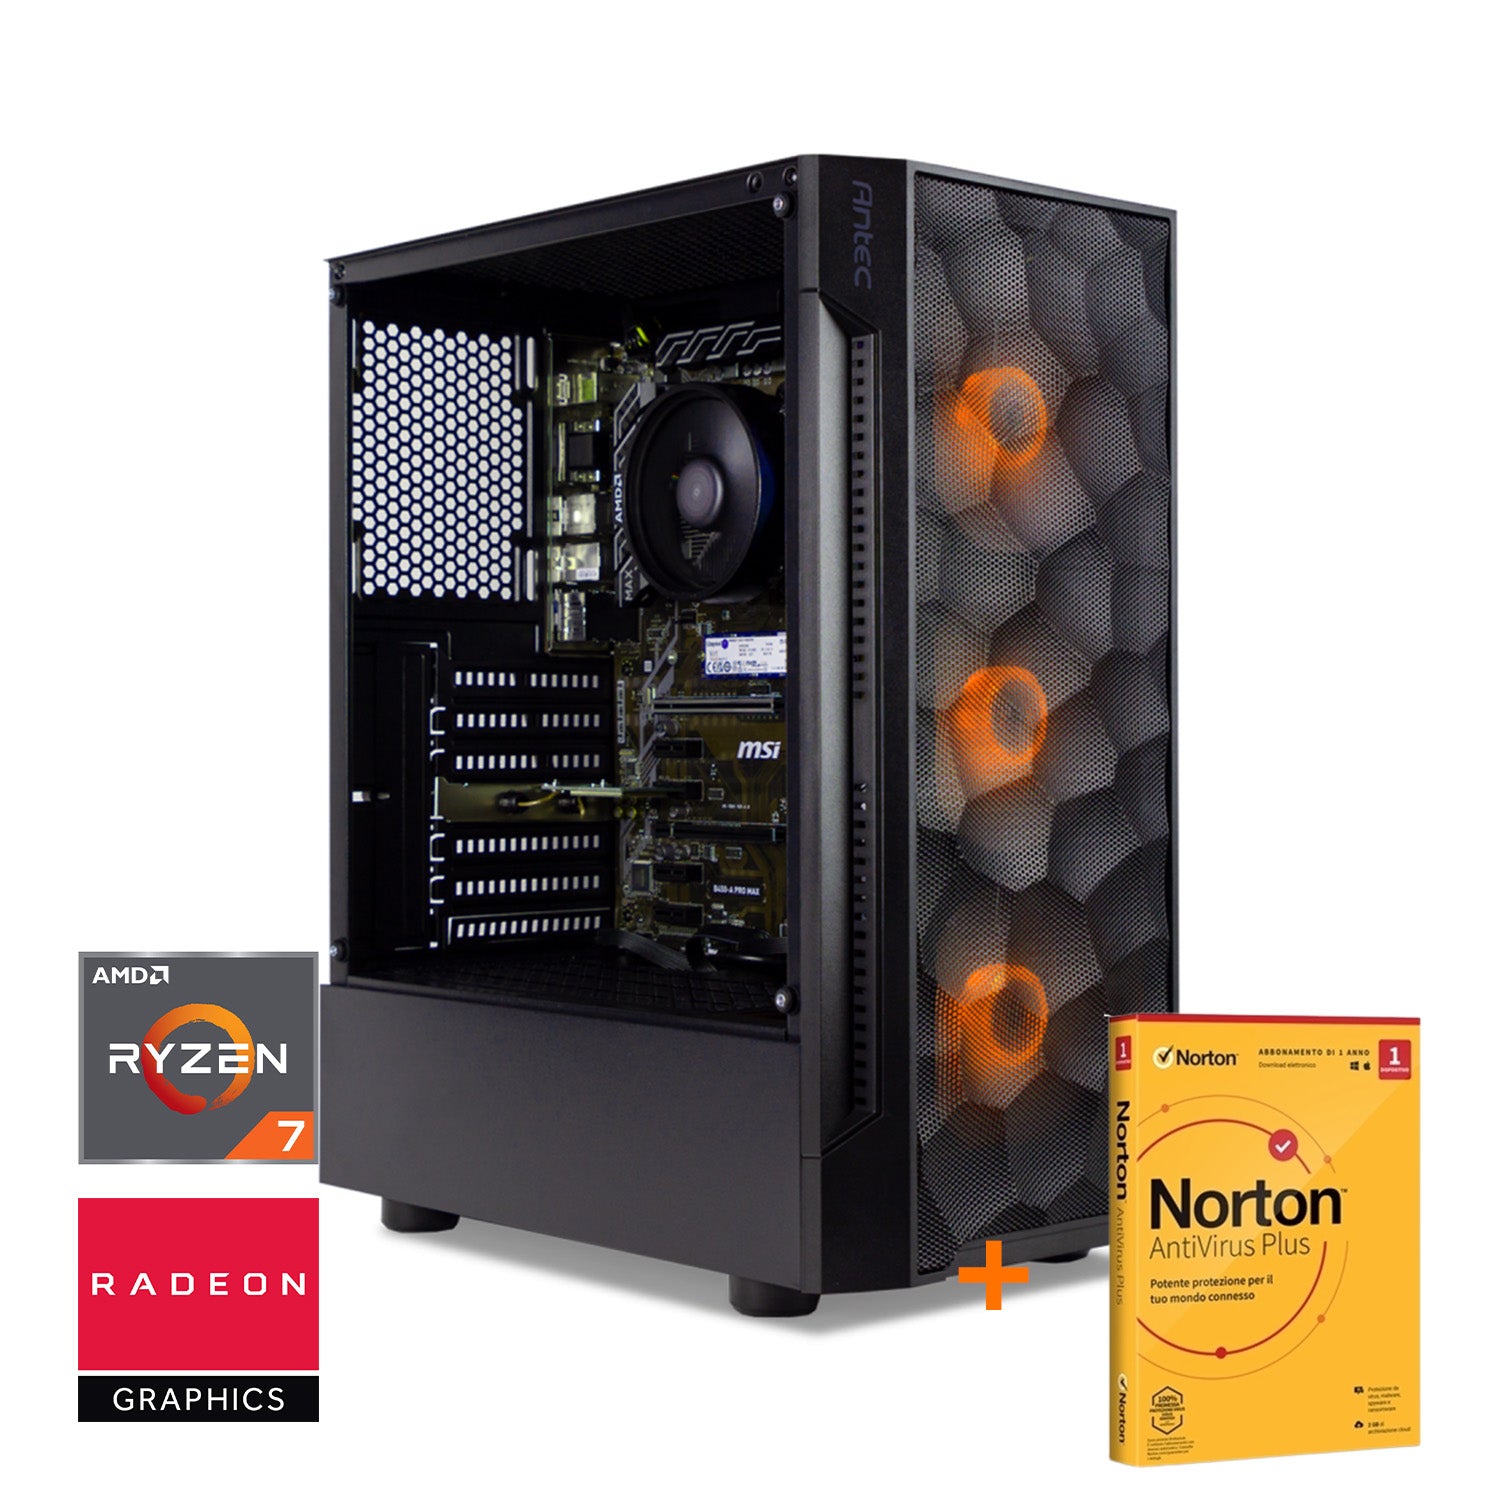 OVERCLOCK Rapid Office 5 + Norton Antivirus 1 Year - PC Gaming AMD Ryzen 5 5600g, 16gb ddr4 3200mhz, 512gb, APU Radeon Graphics 7, Win 11 Pro